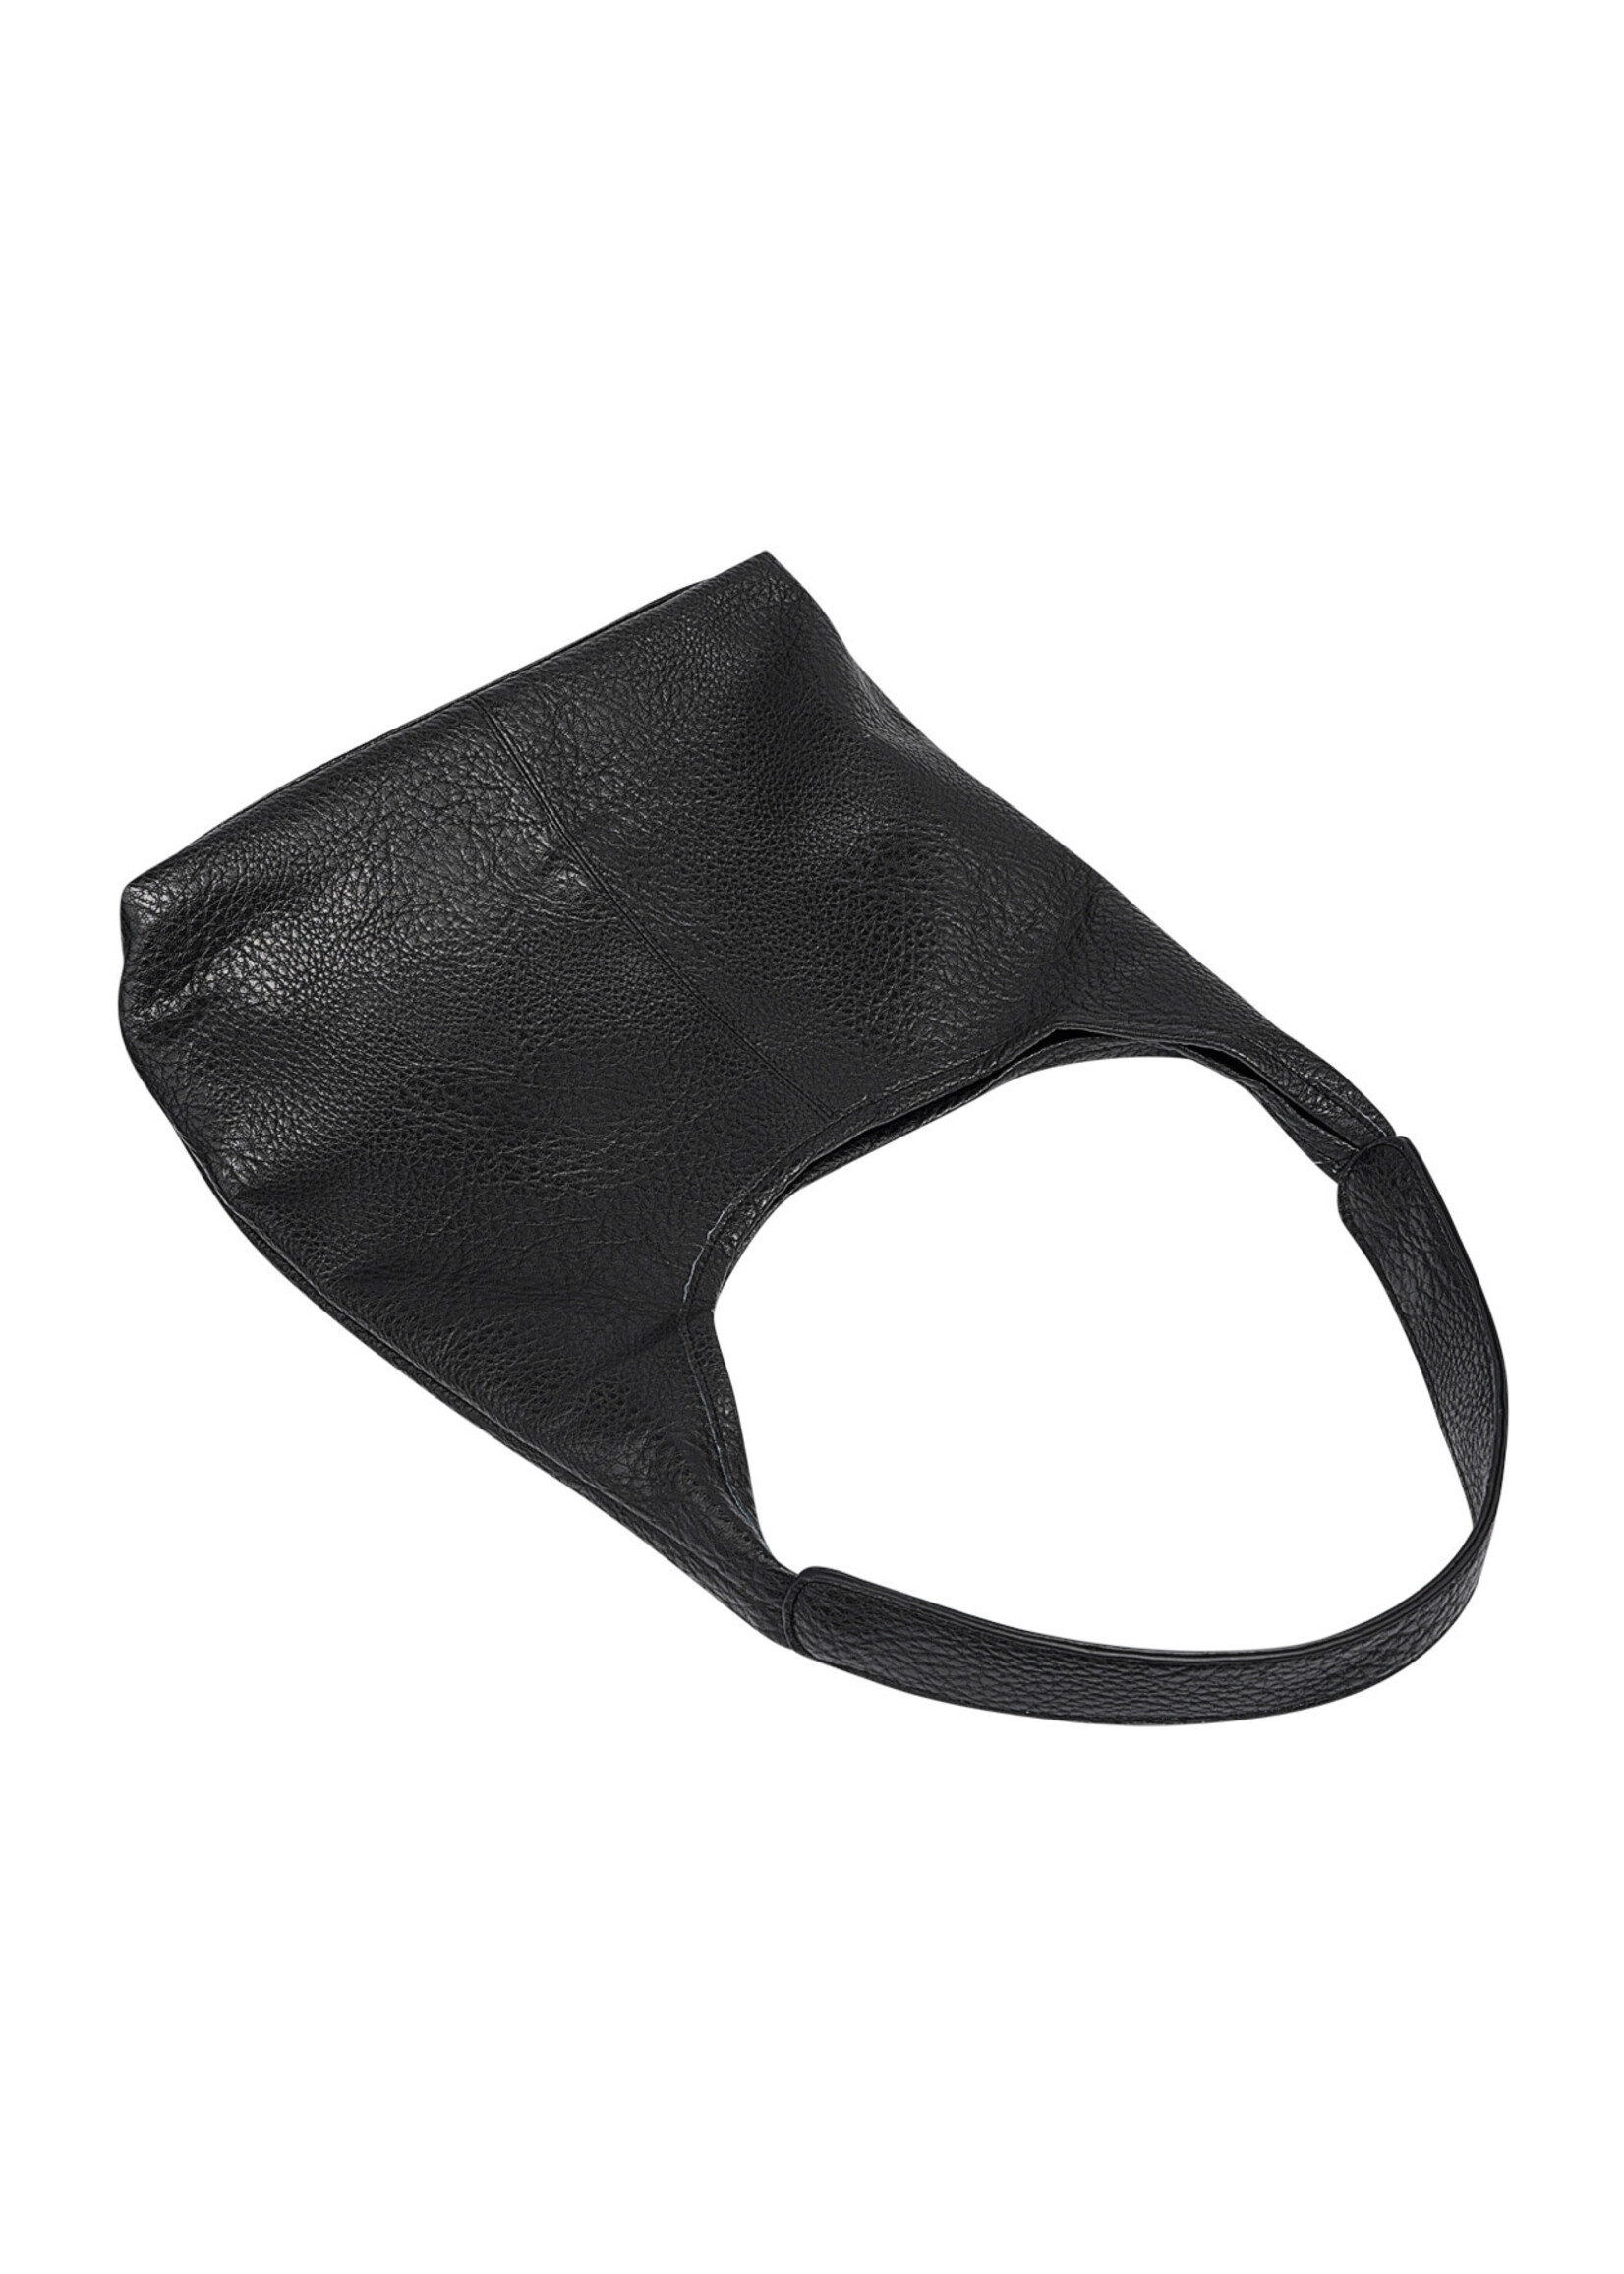 Shopper bag - black colored